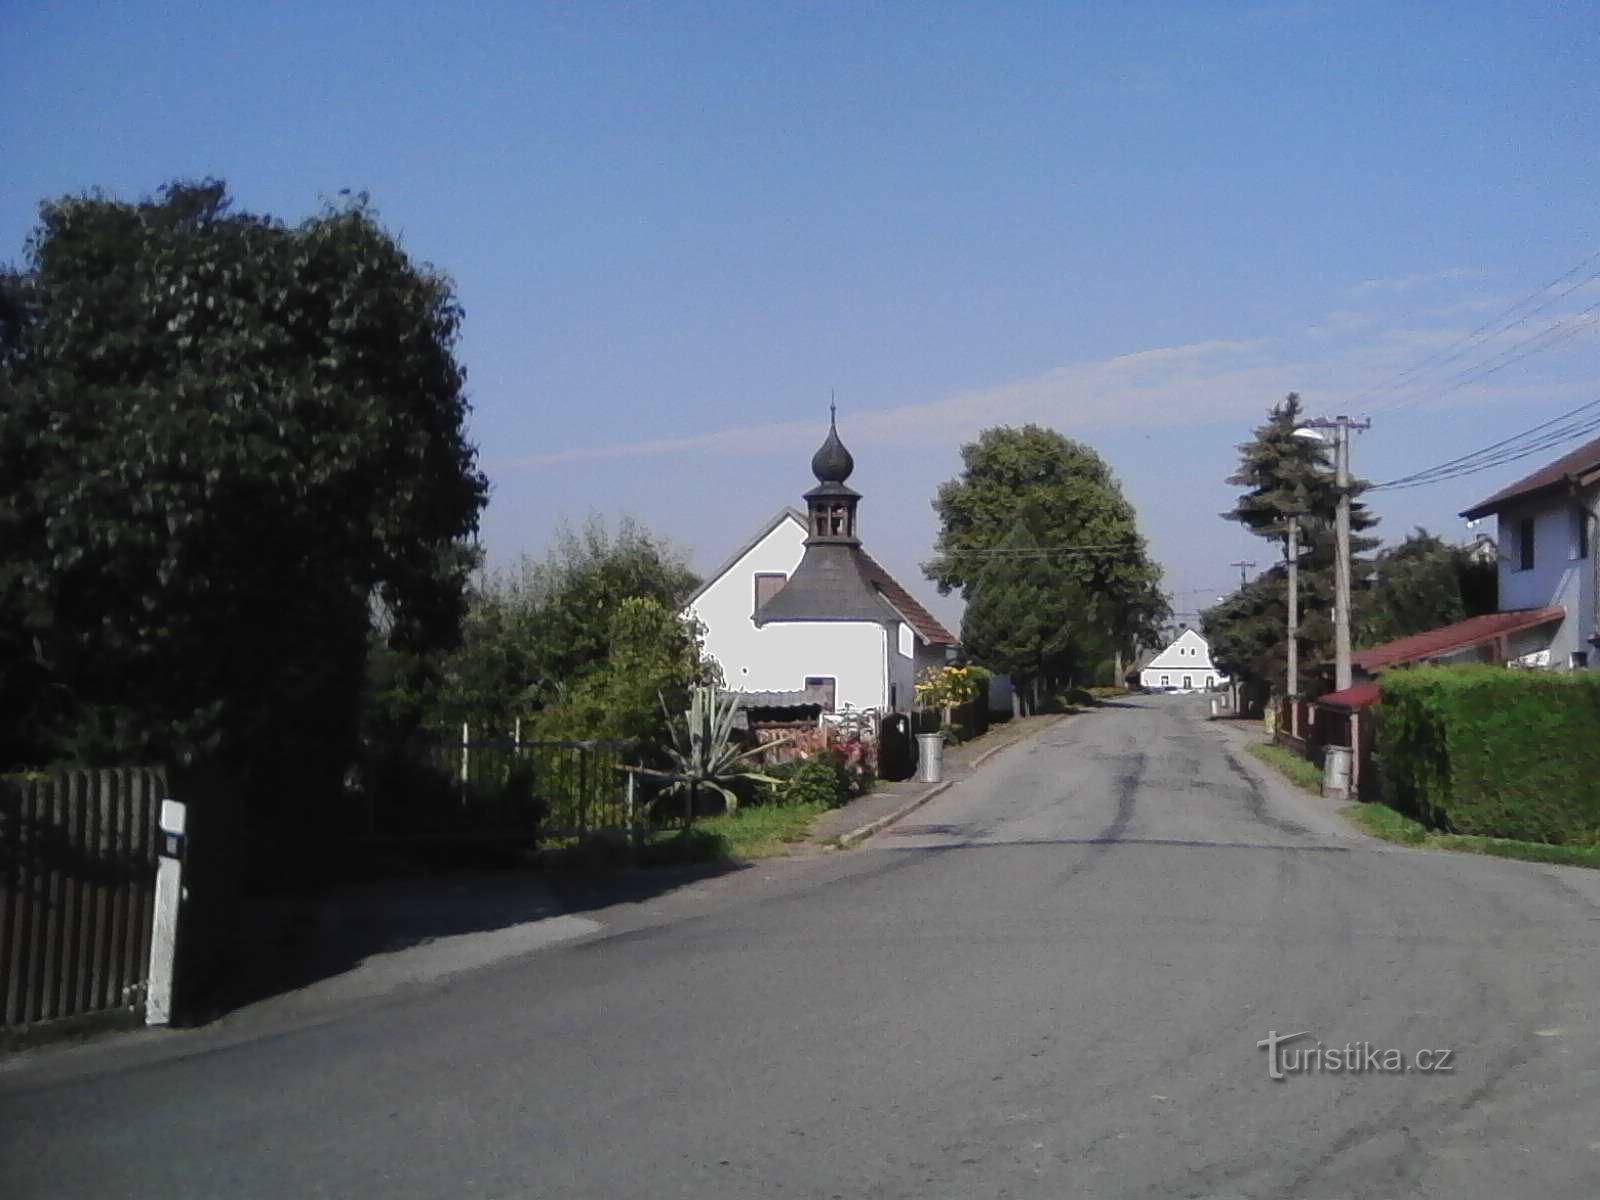 2. Chapel in the village of Horní Hořice.